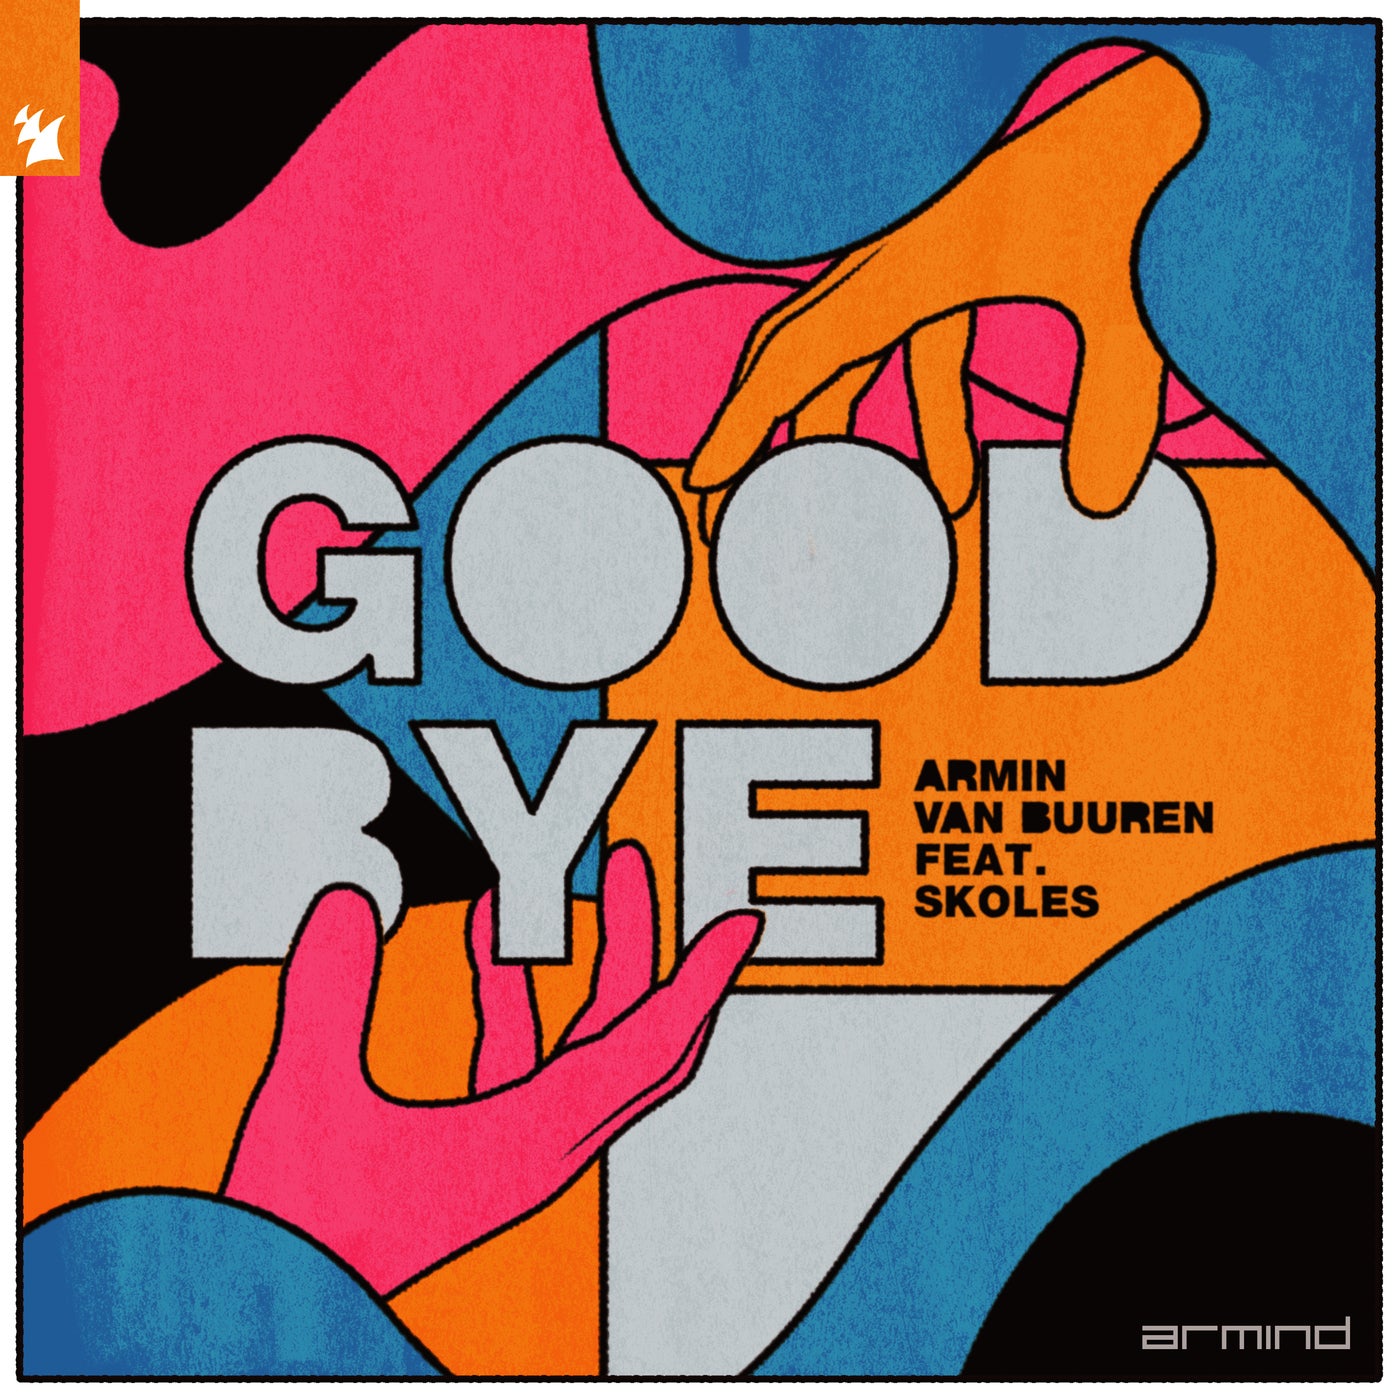 Armin van Buuren feat. SKOLES presents Goodbye on Armada Music